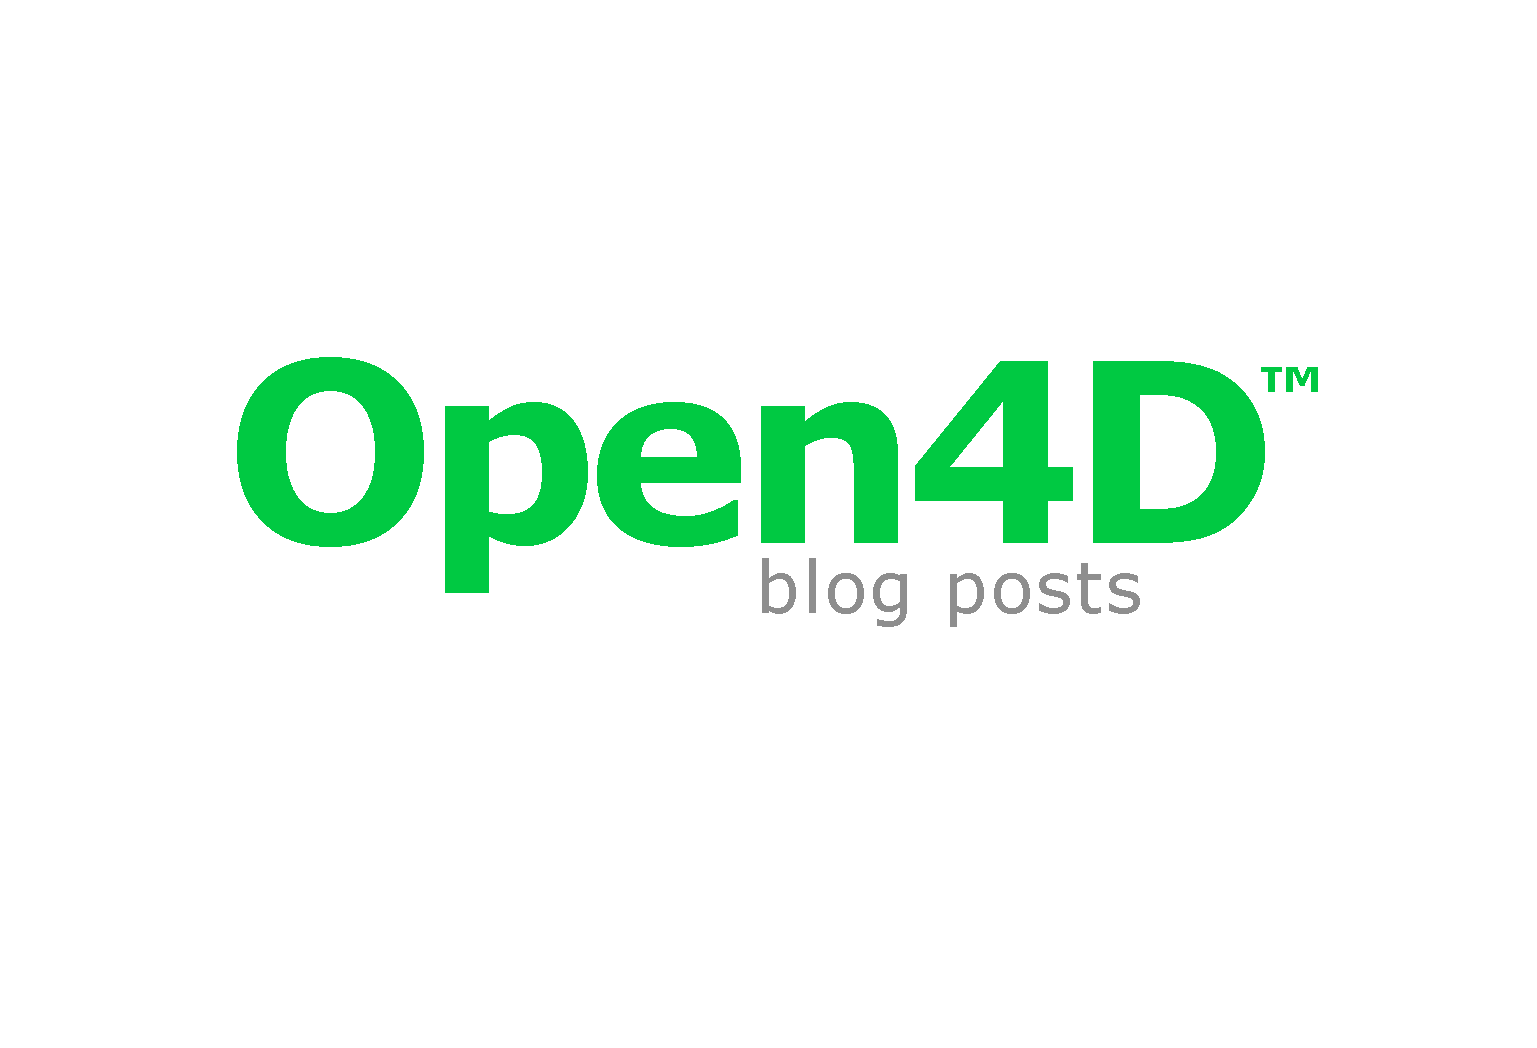 Open4D